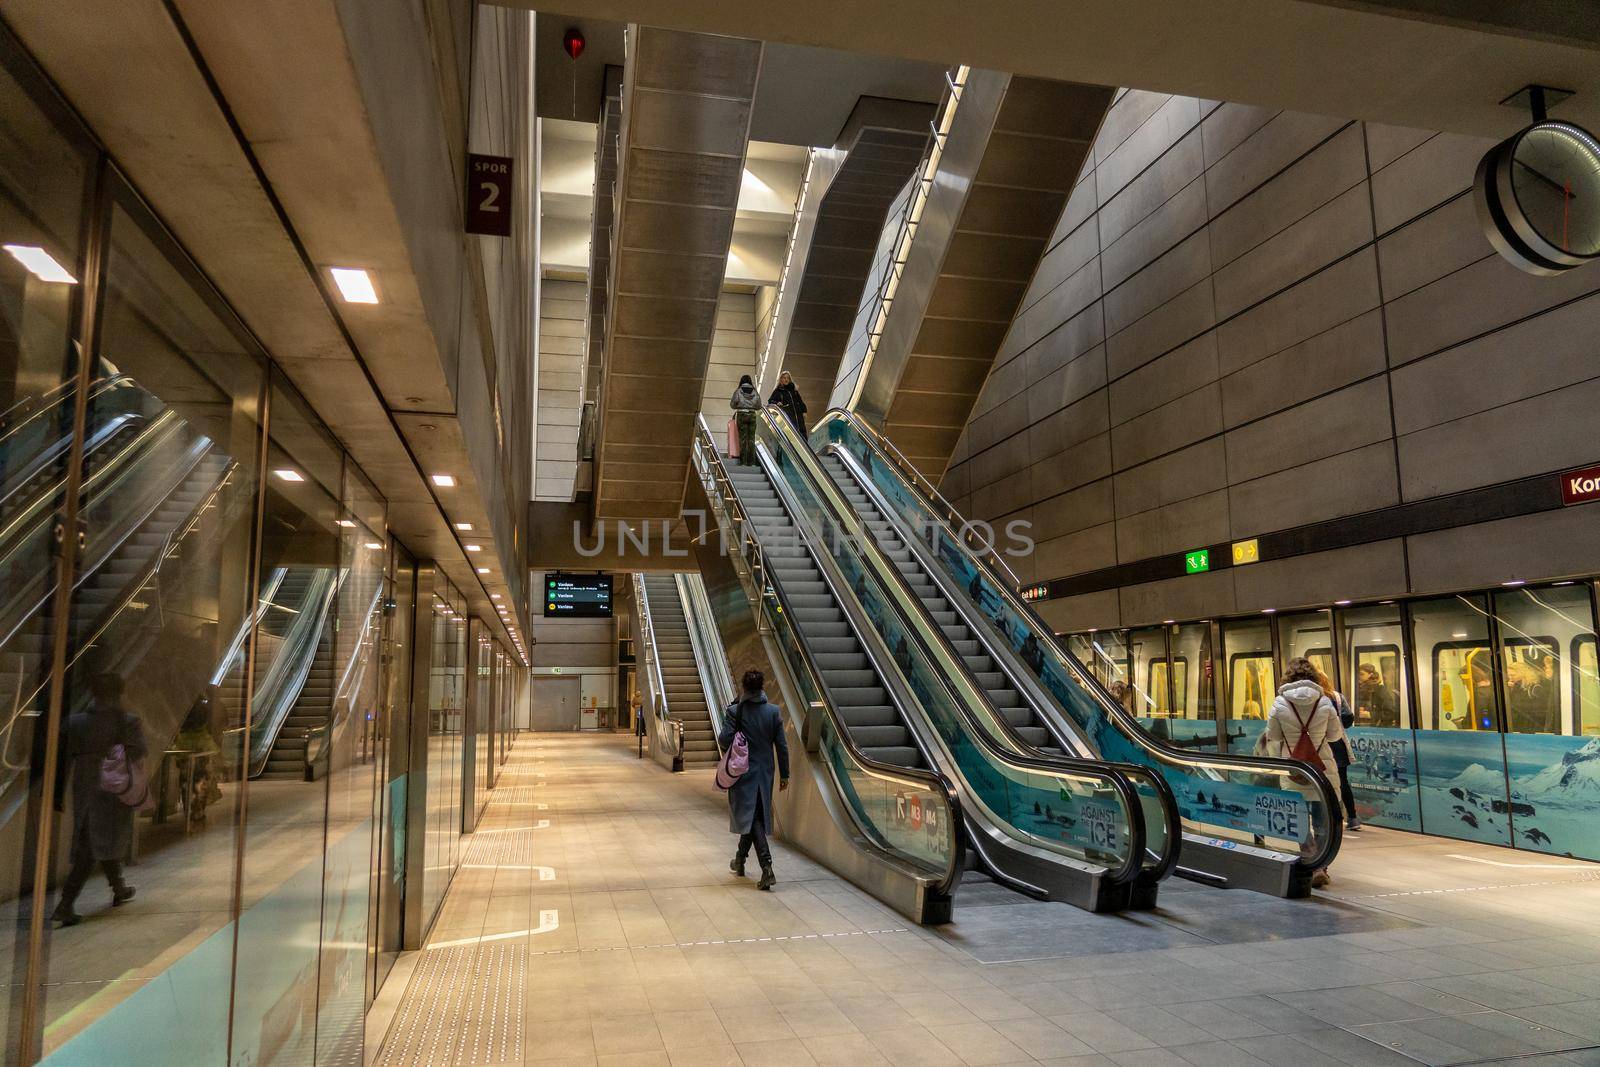 Copenhagen, Denmark - March 01, 2022: Interior view of the metro station Kongens Nytorv on the City Circle Line